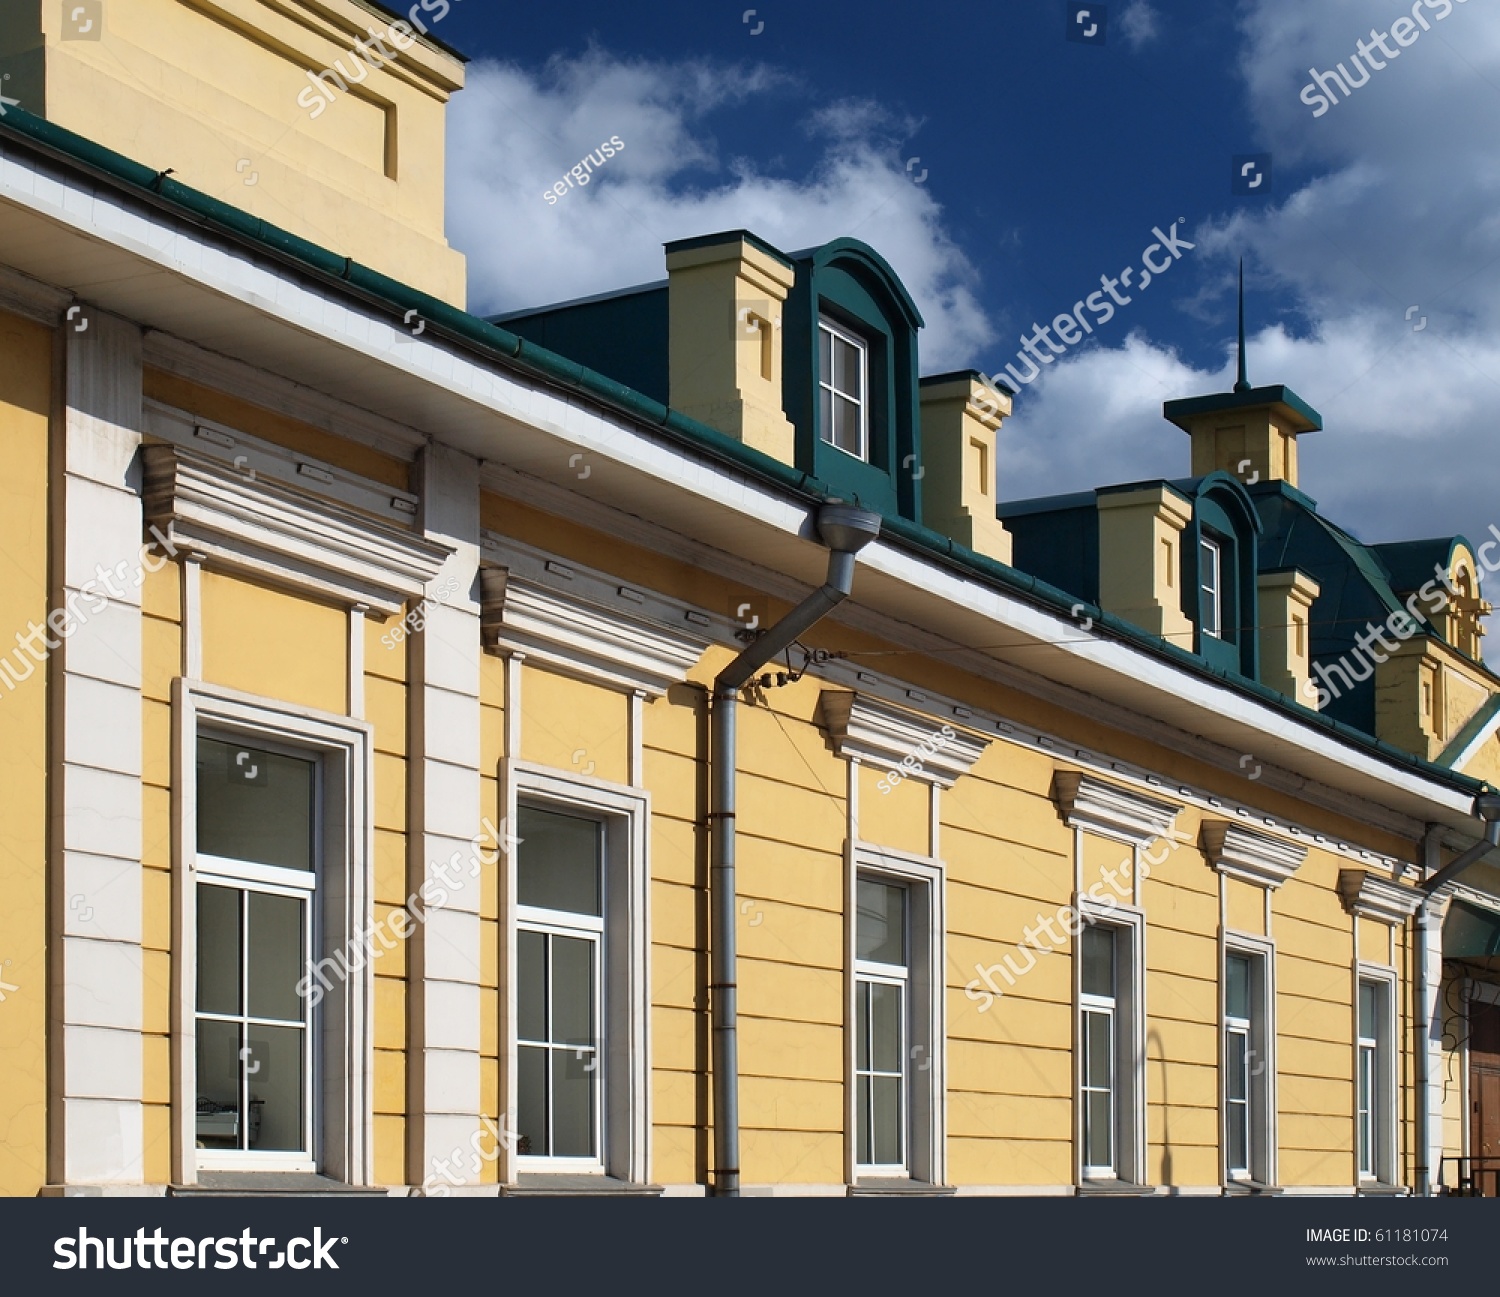 Moscow Windows Stock Photo 61181074 - Shutterstock